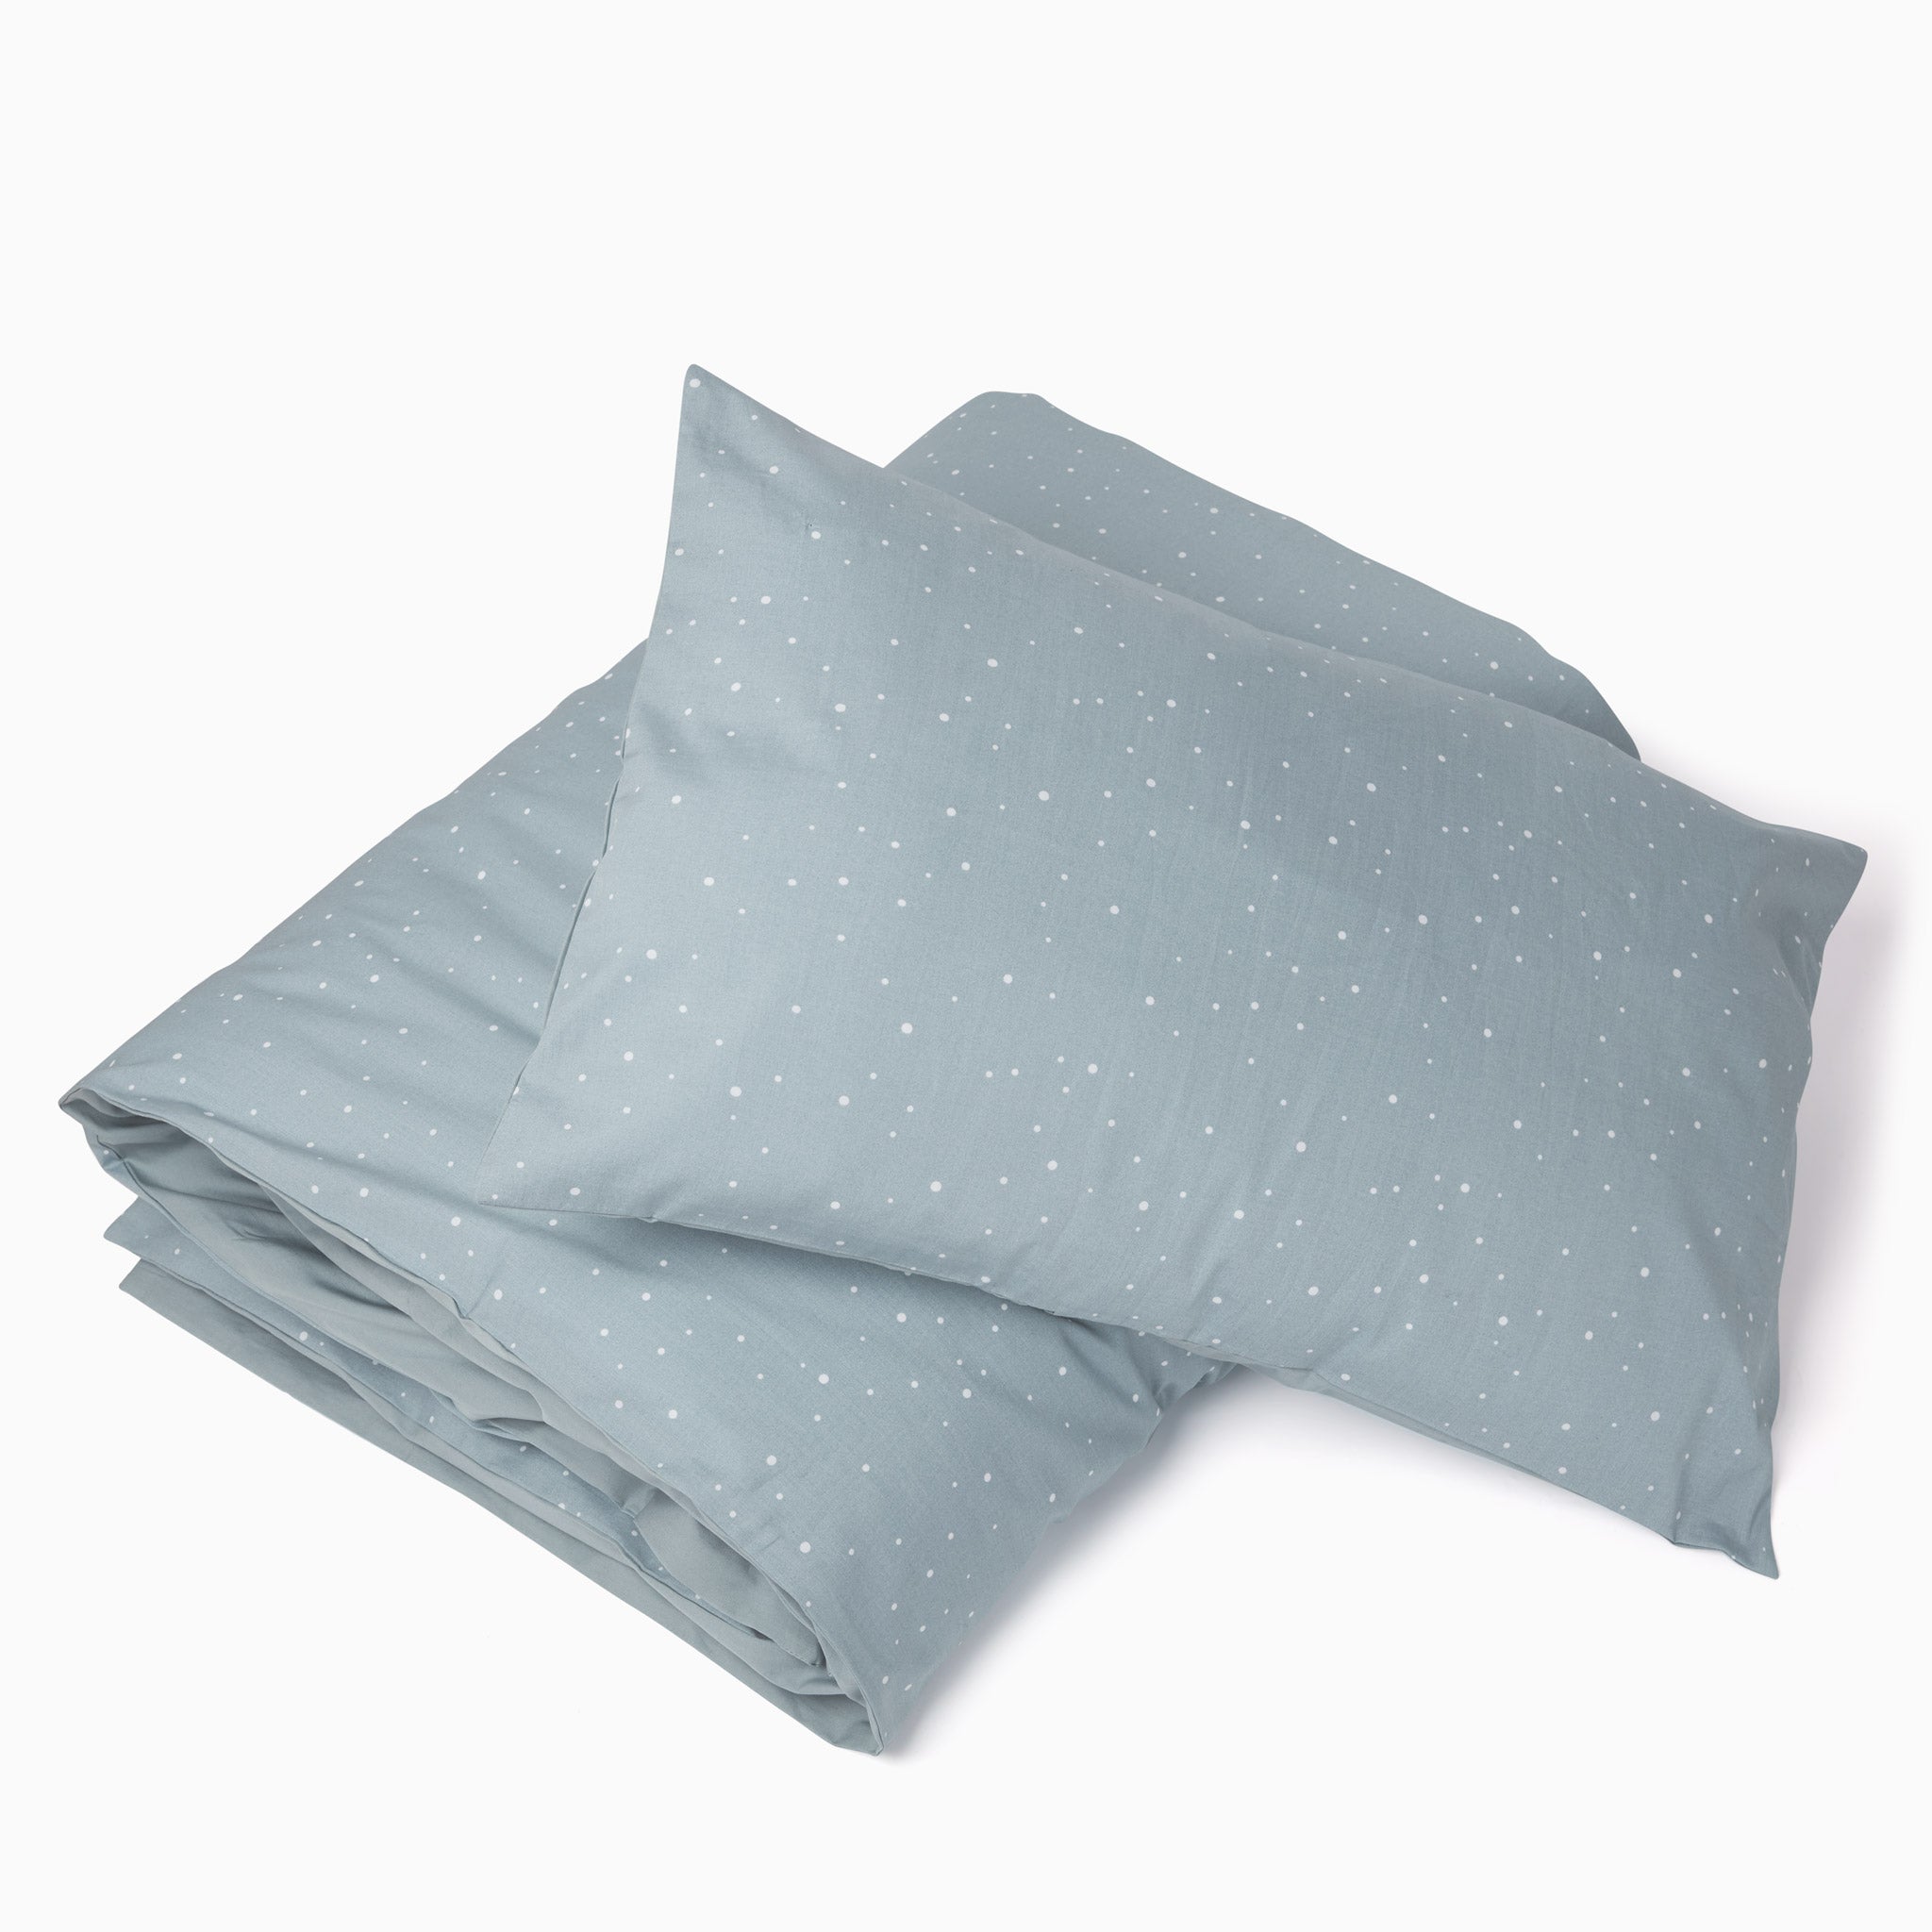 Cot Bed Duvet Cover Pillowcase Set Mori